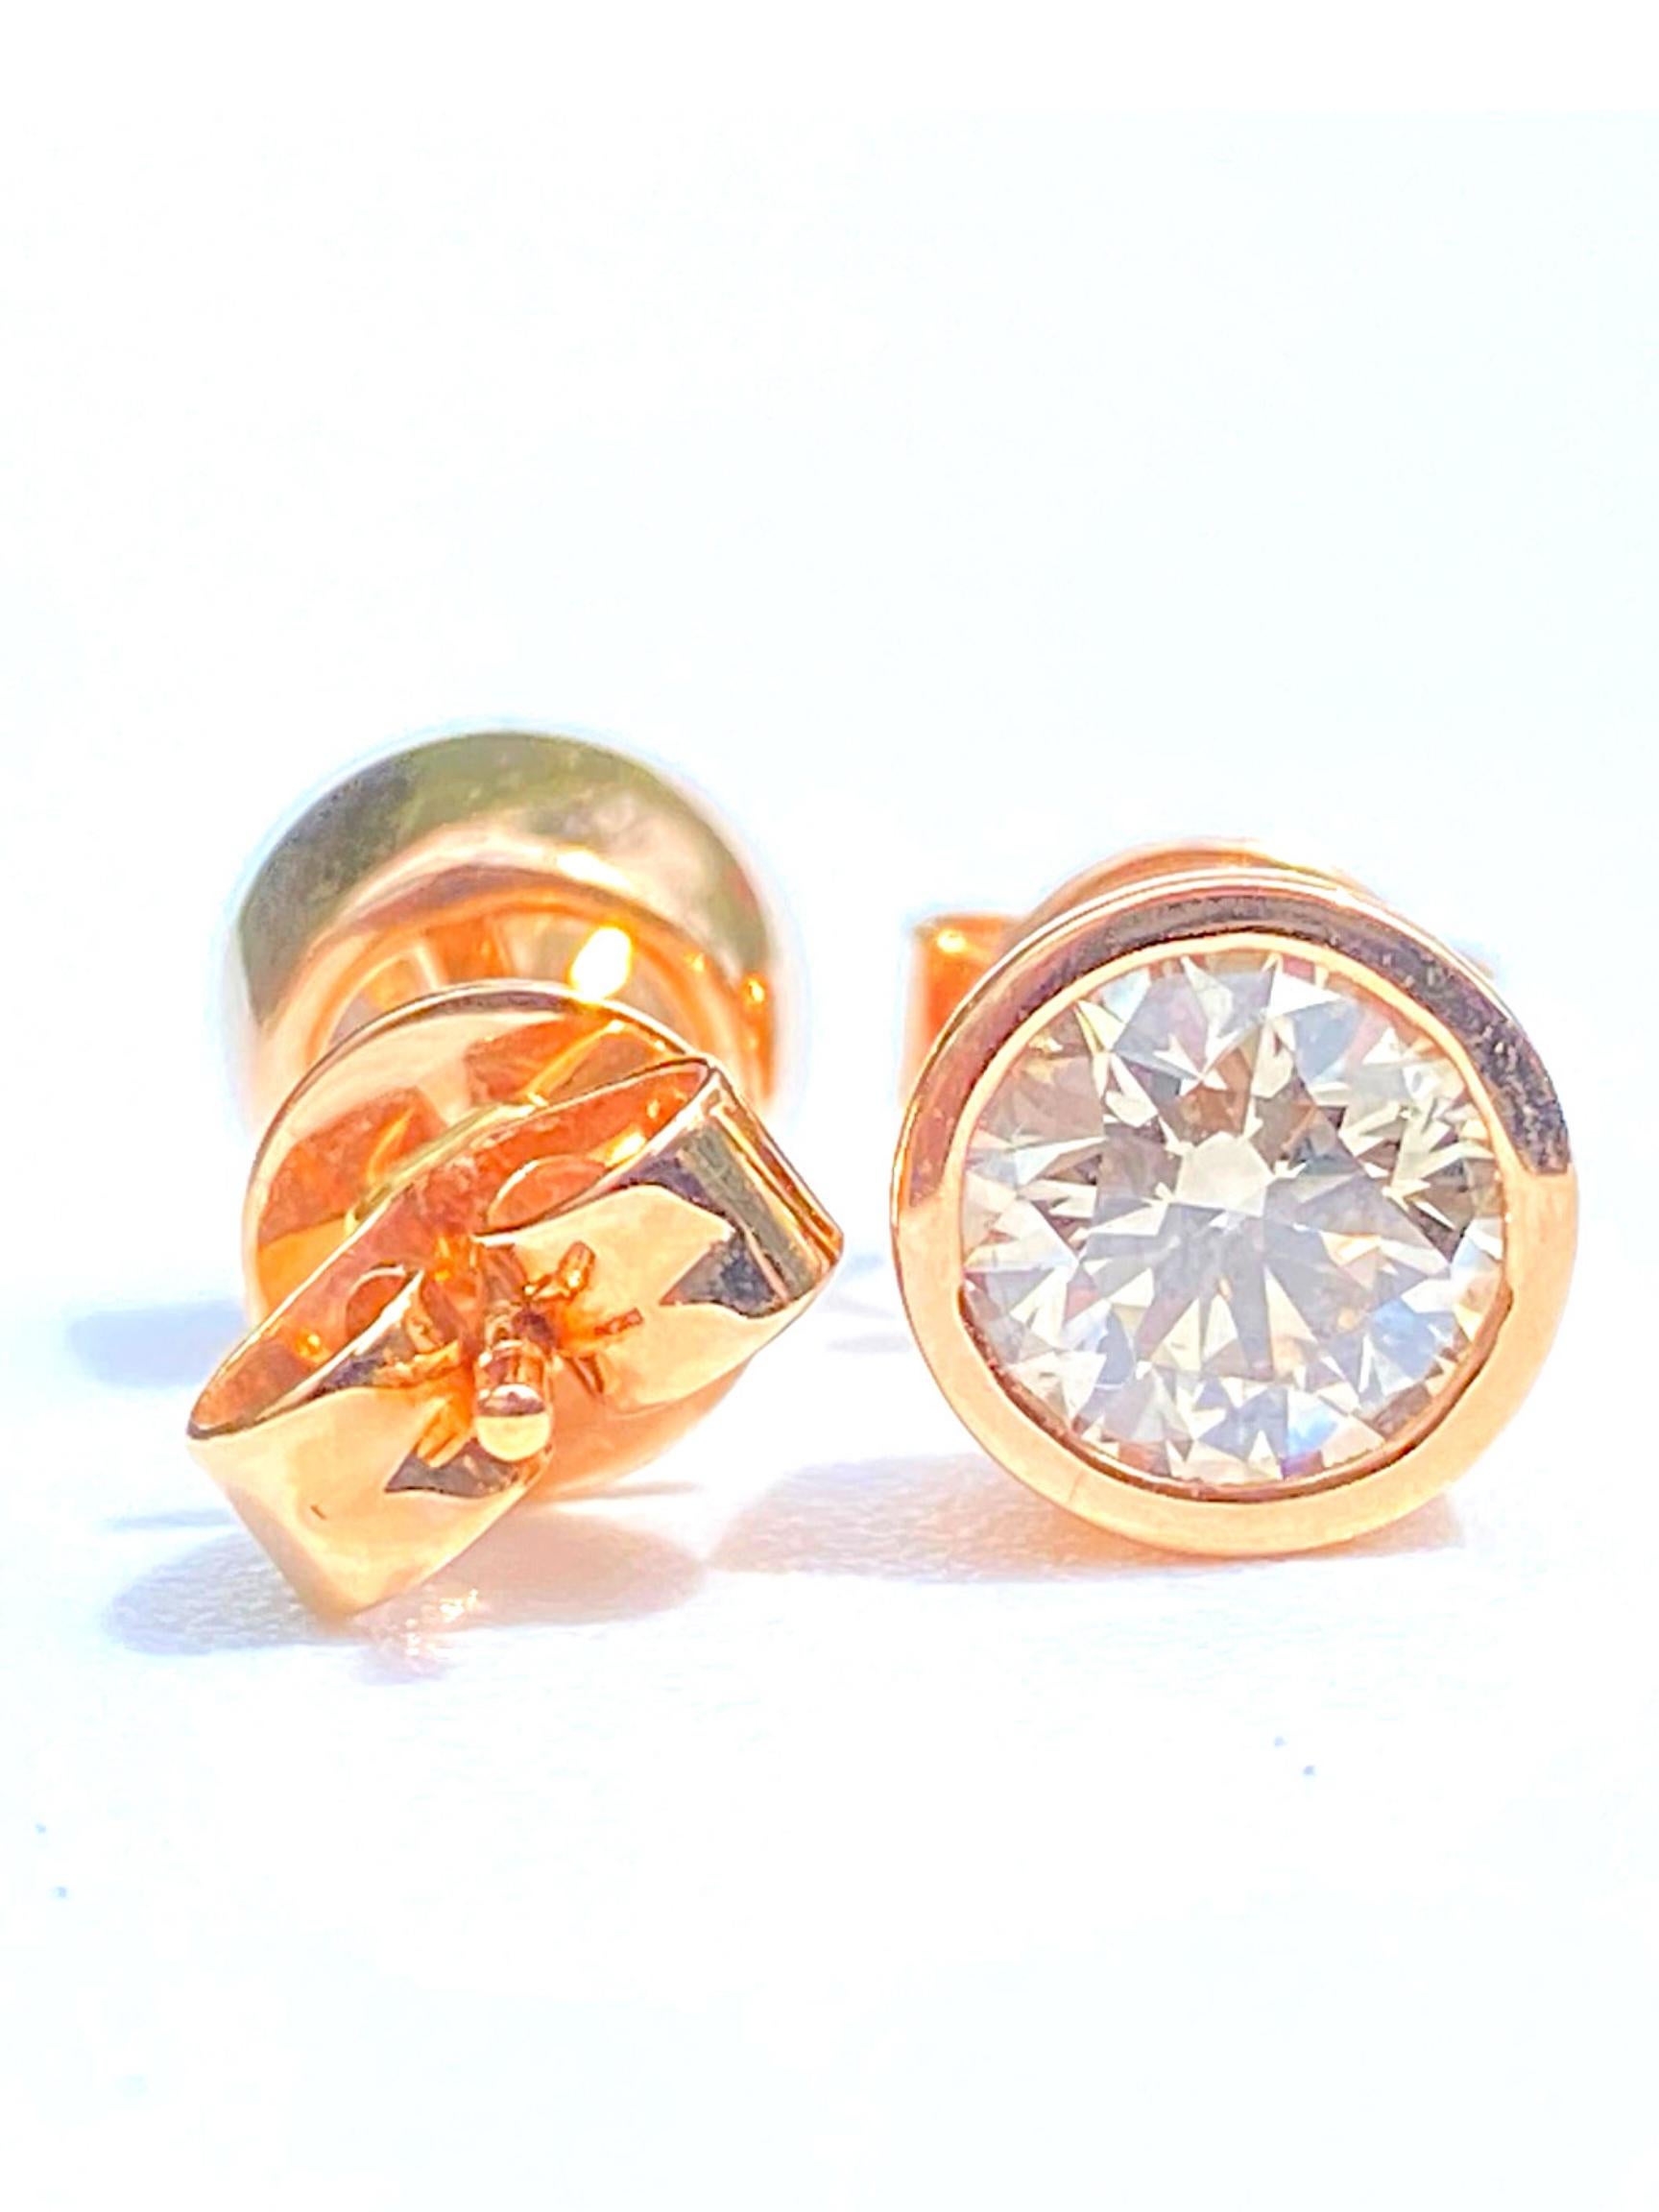 Round Cut 1.58 Carat Diamond and 18k Rose Gold Stud Earrings Round-Brilliant Cut Diamonds For Sale